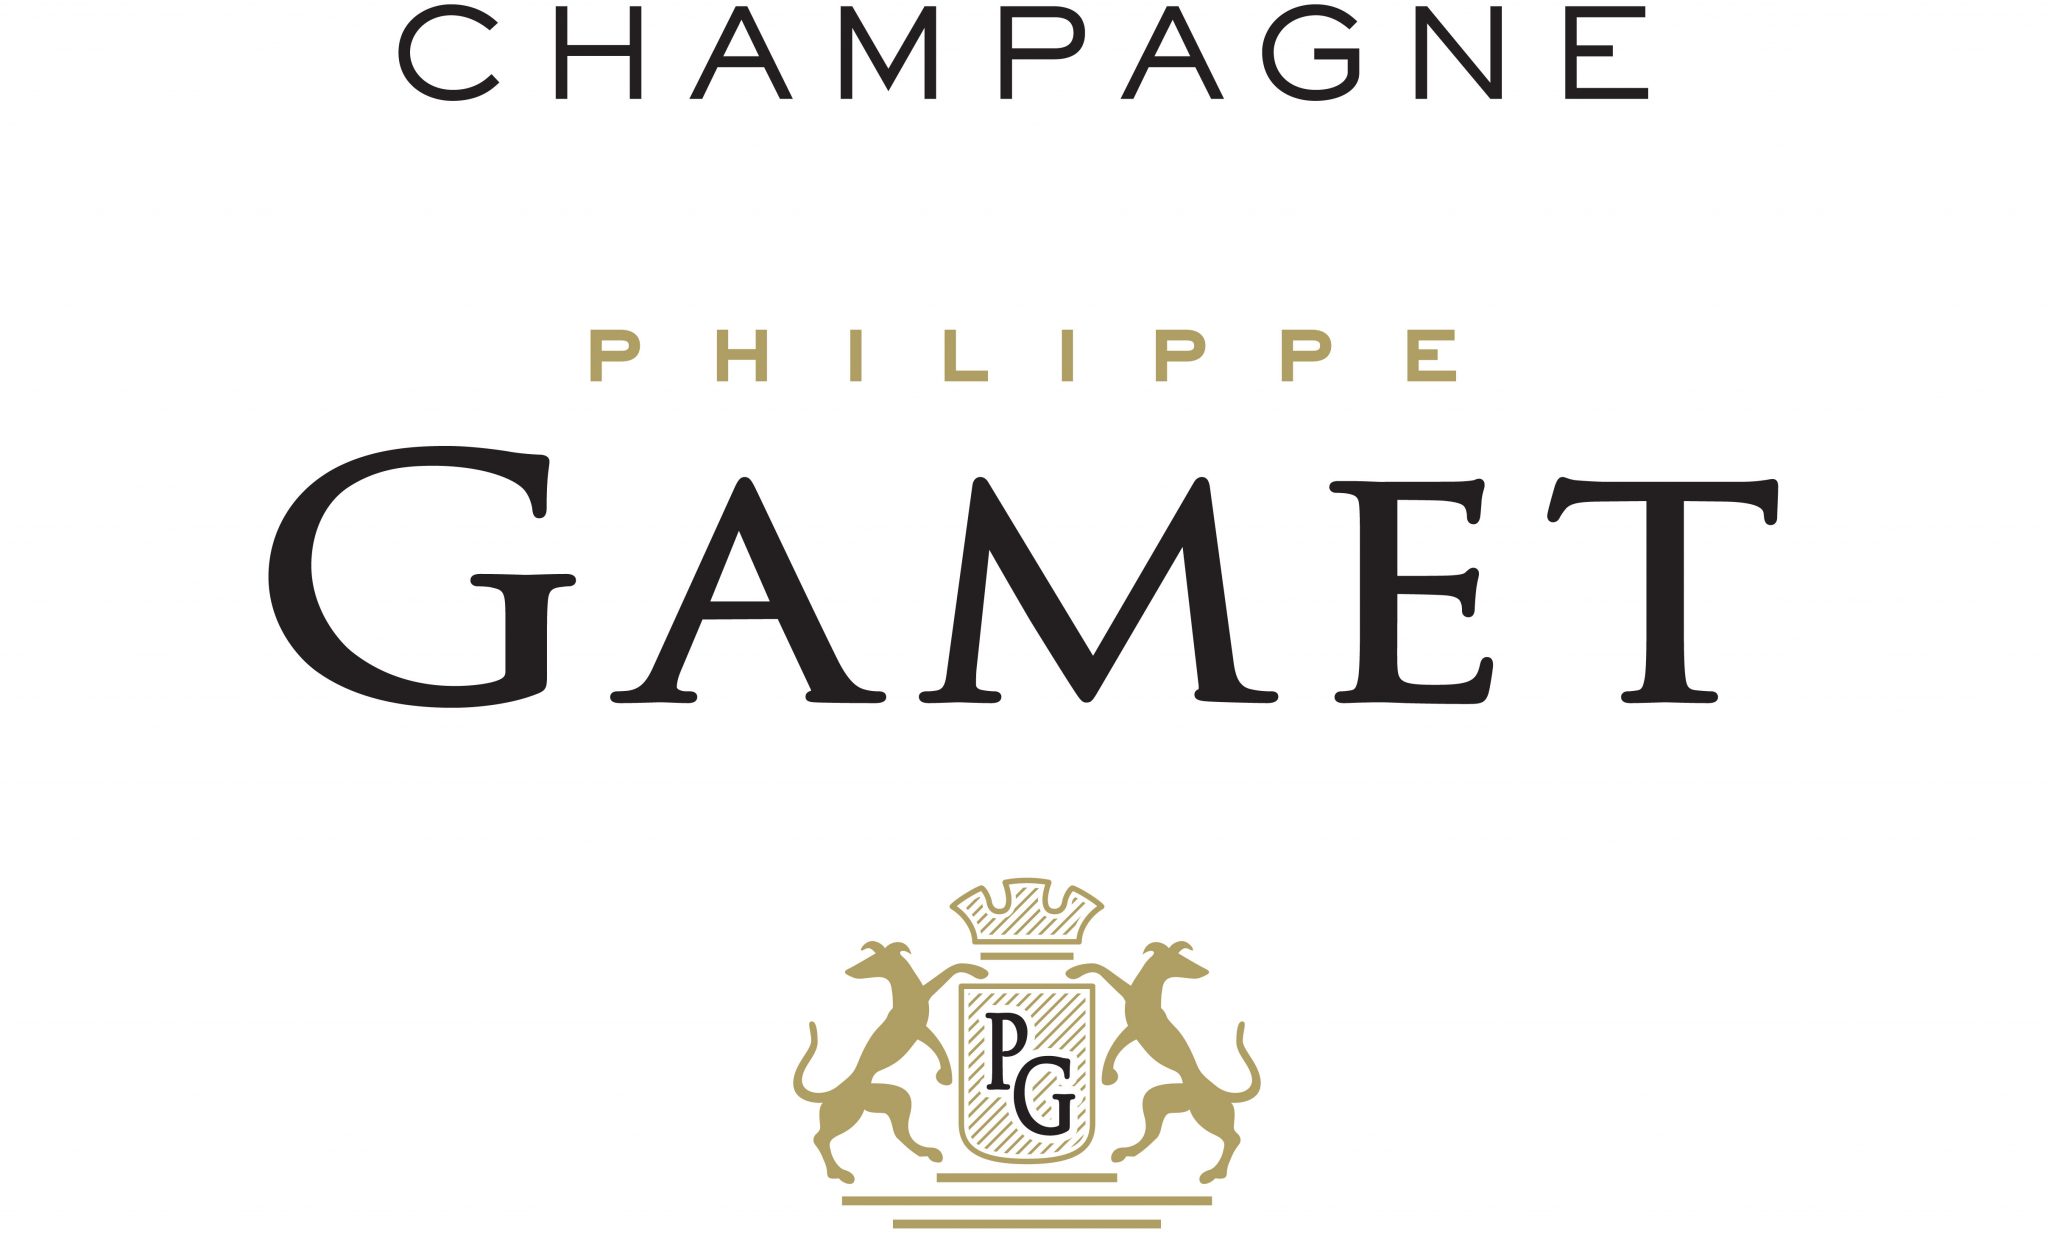 Champagne Philippe Gamet